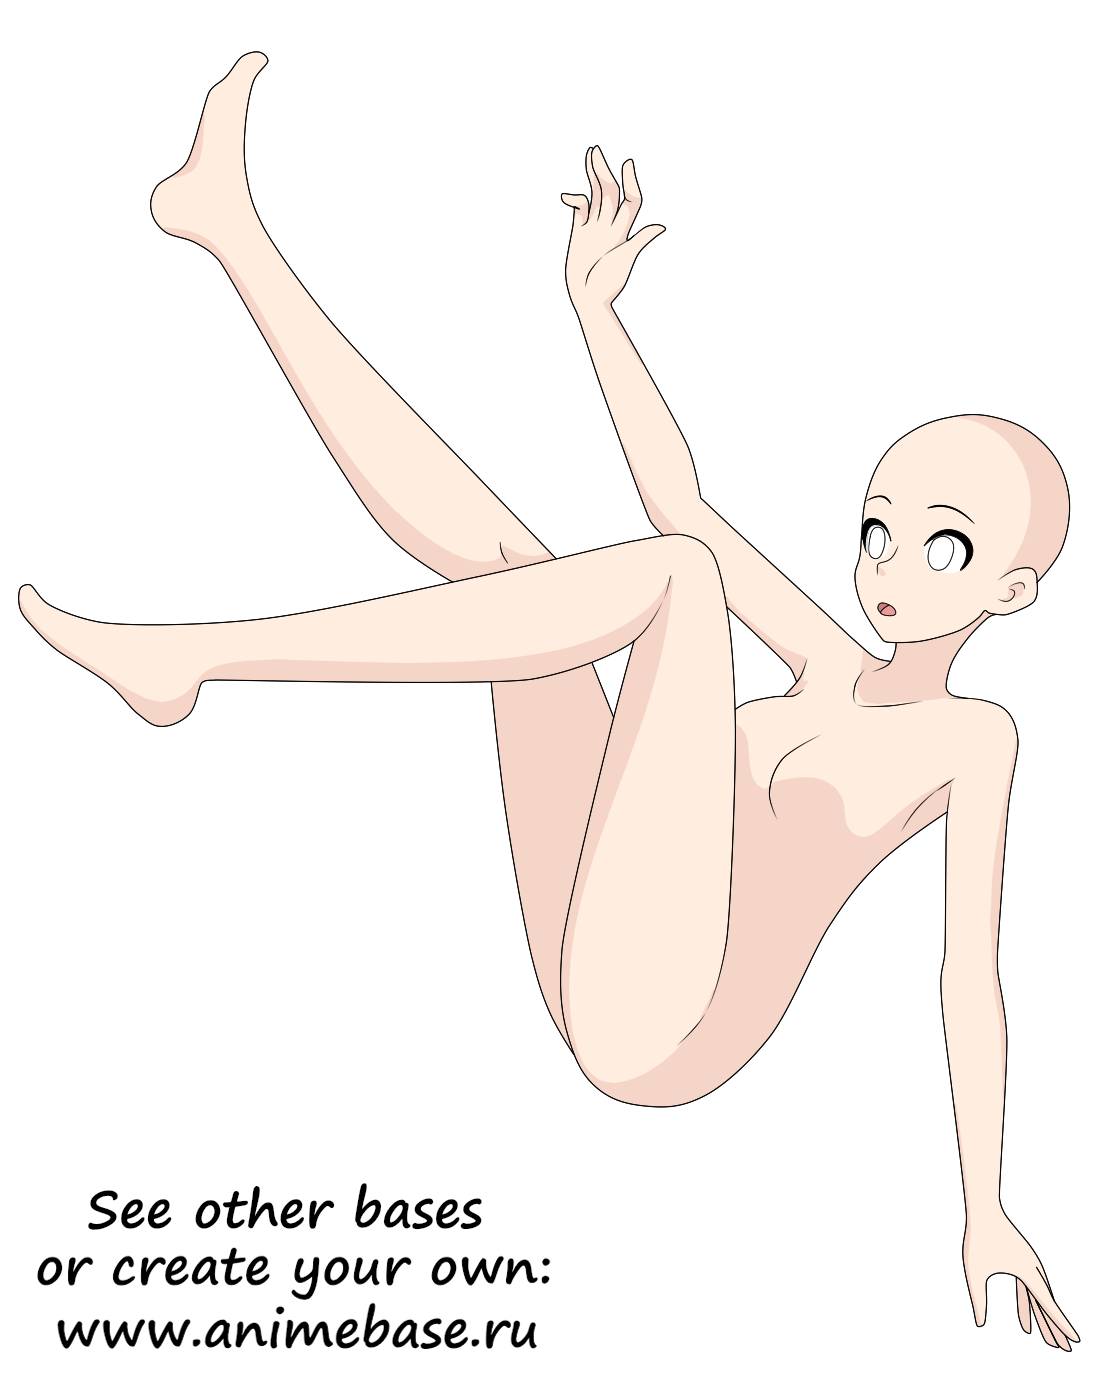 Female Anime Body Base - Anime cute jumping pose